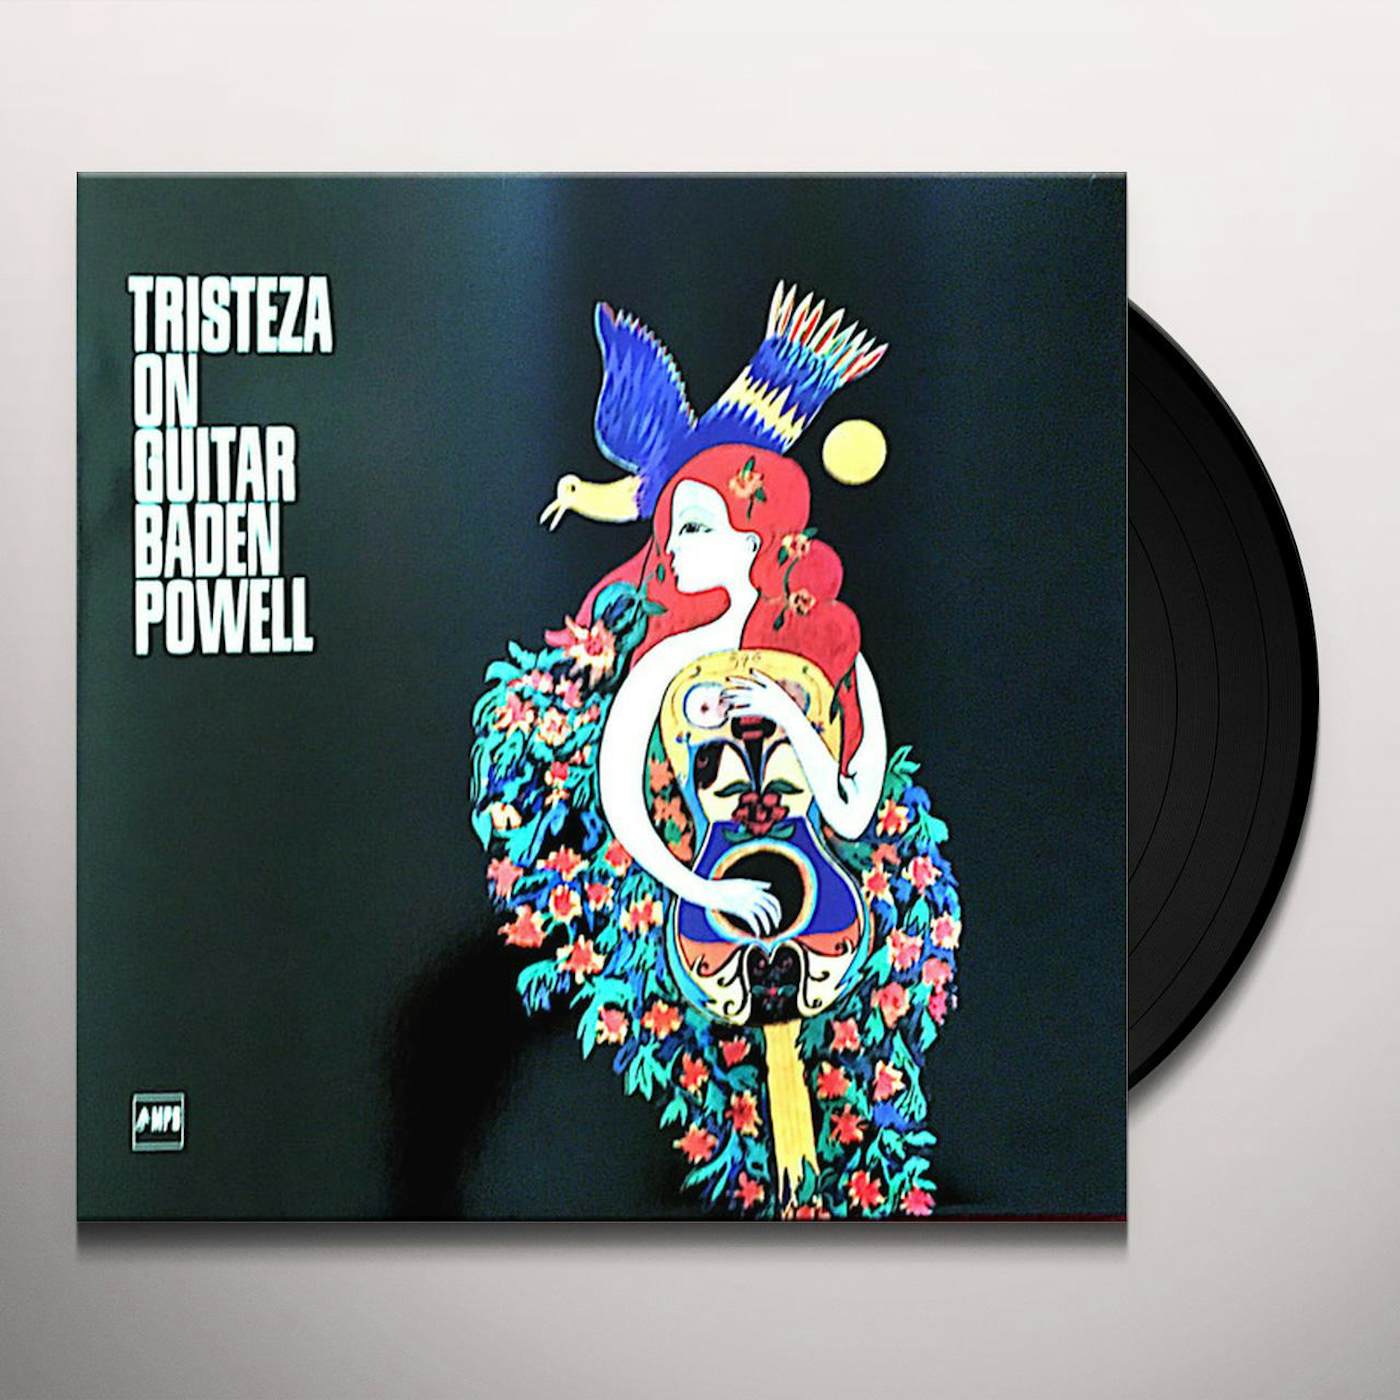 Baden Powell Tristeza on Guitar Vinyl Record